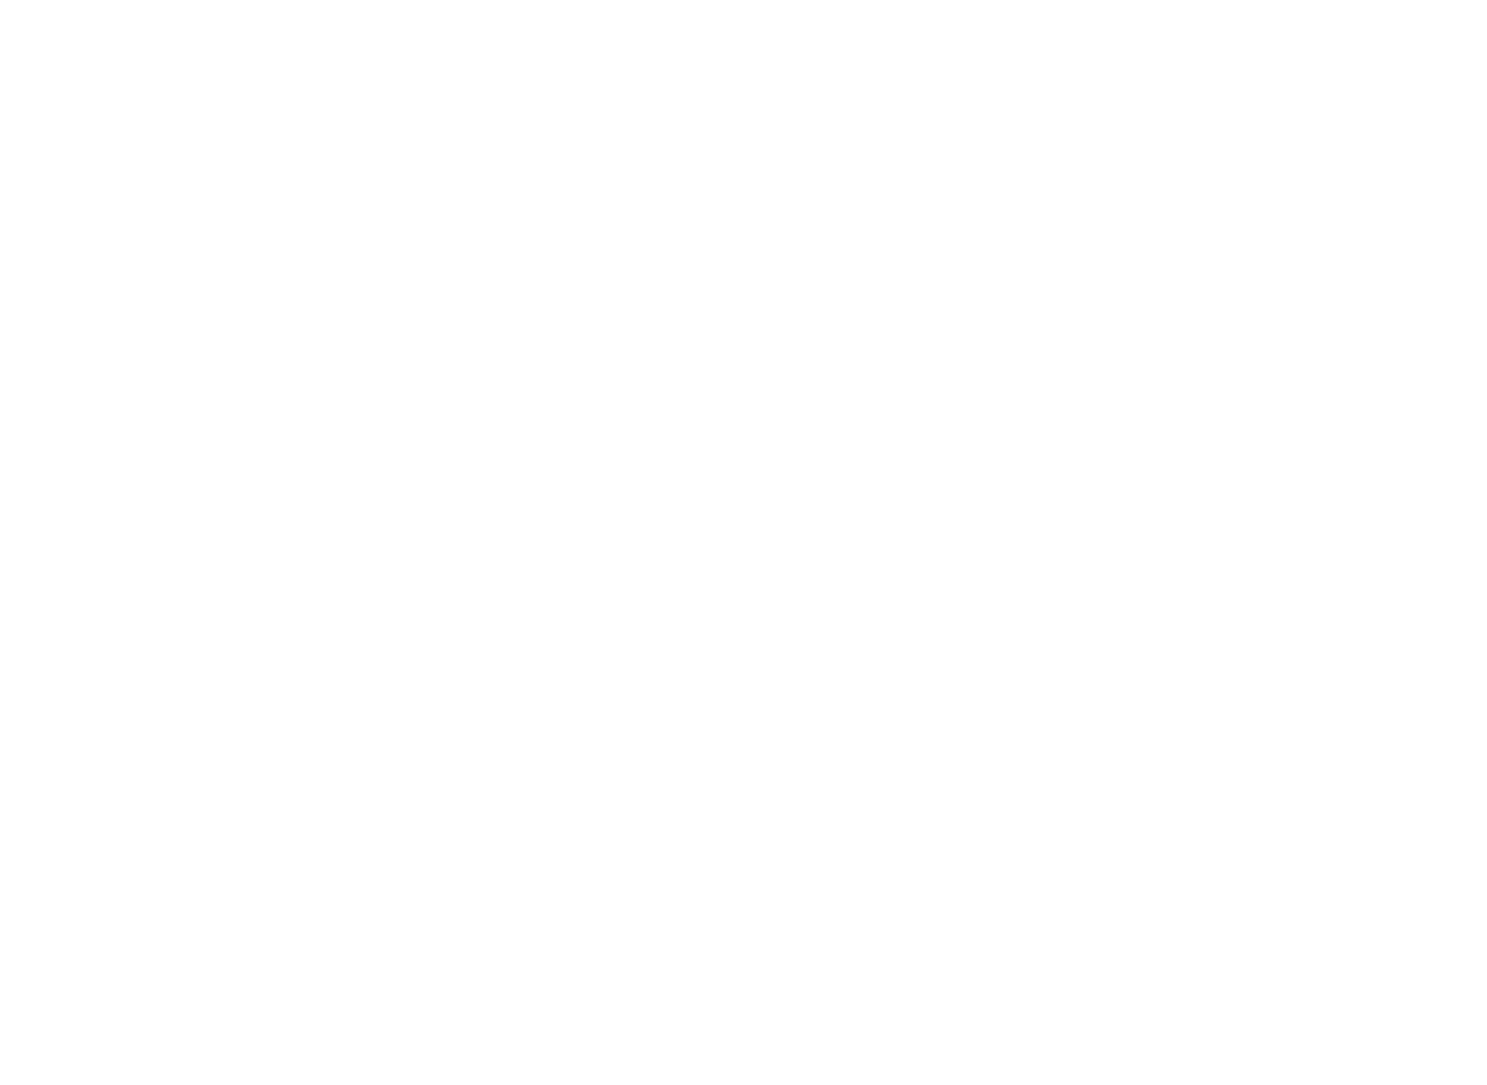 Midlands Consultants